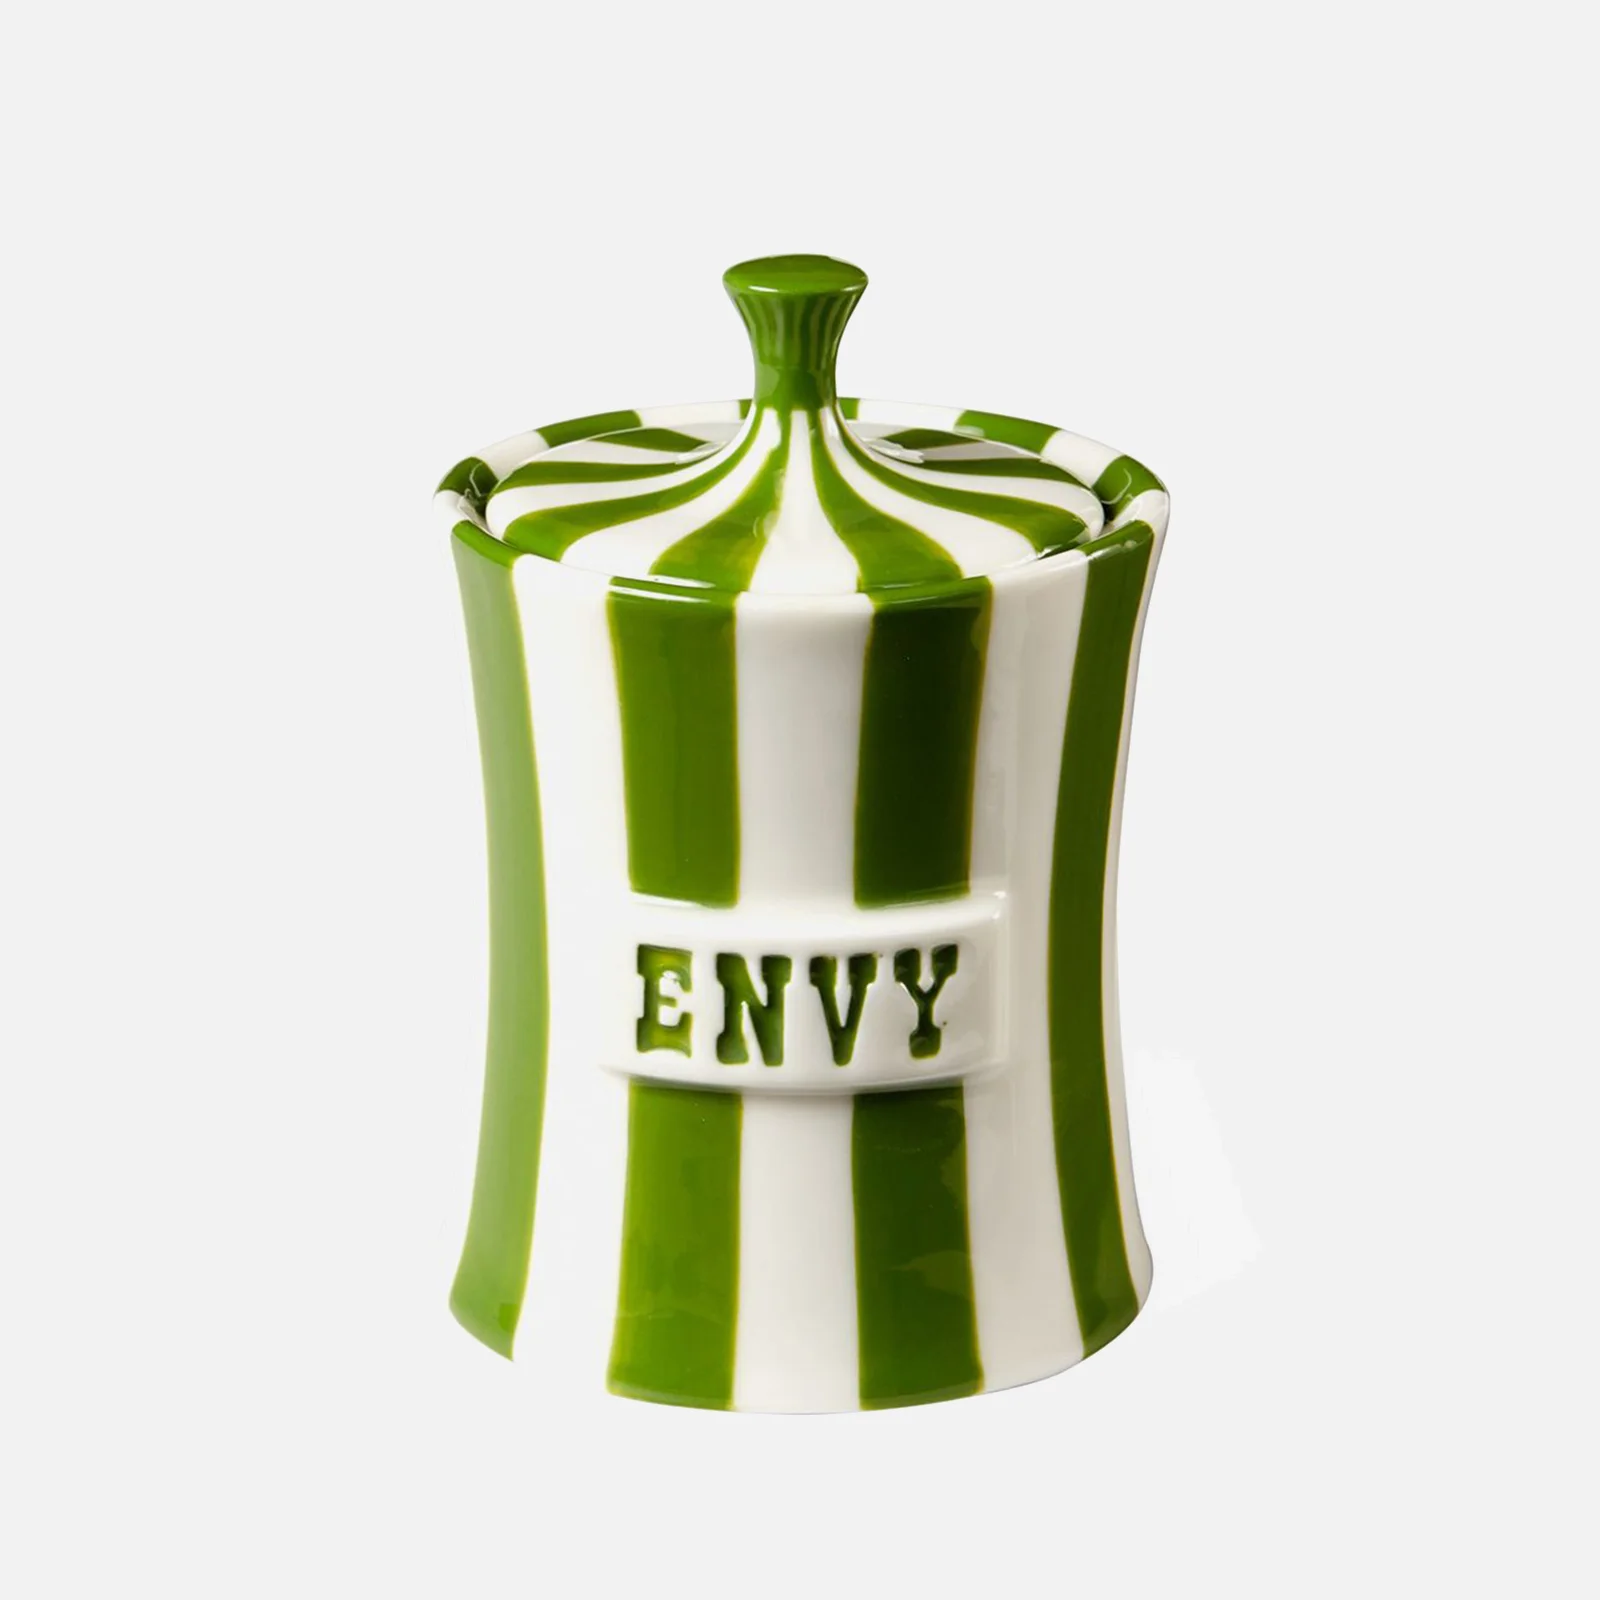 Jonathan Adler Vice Candle - Envy - Green Image 1